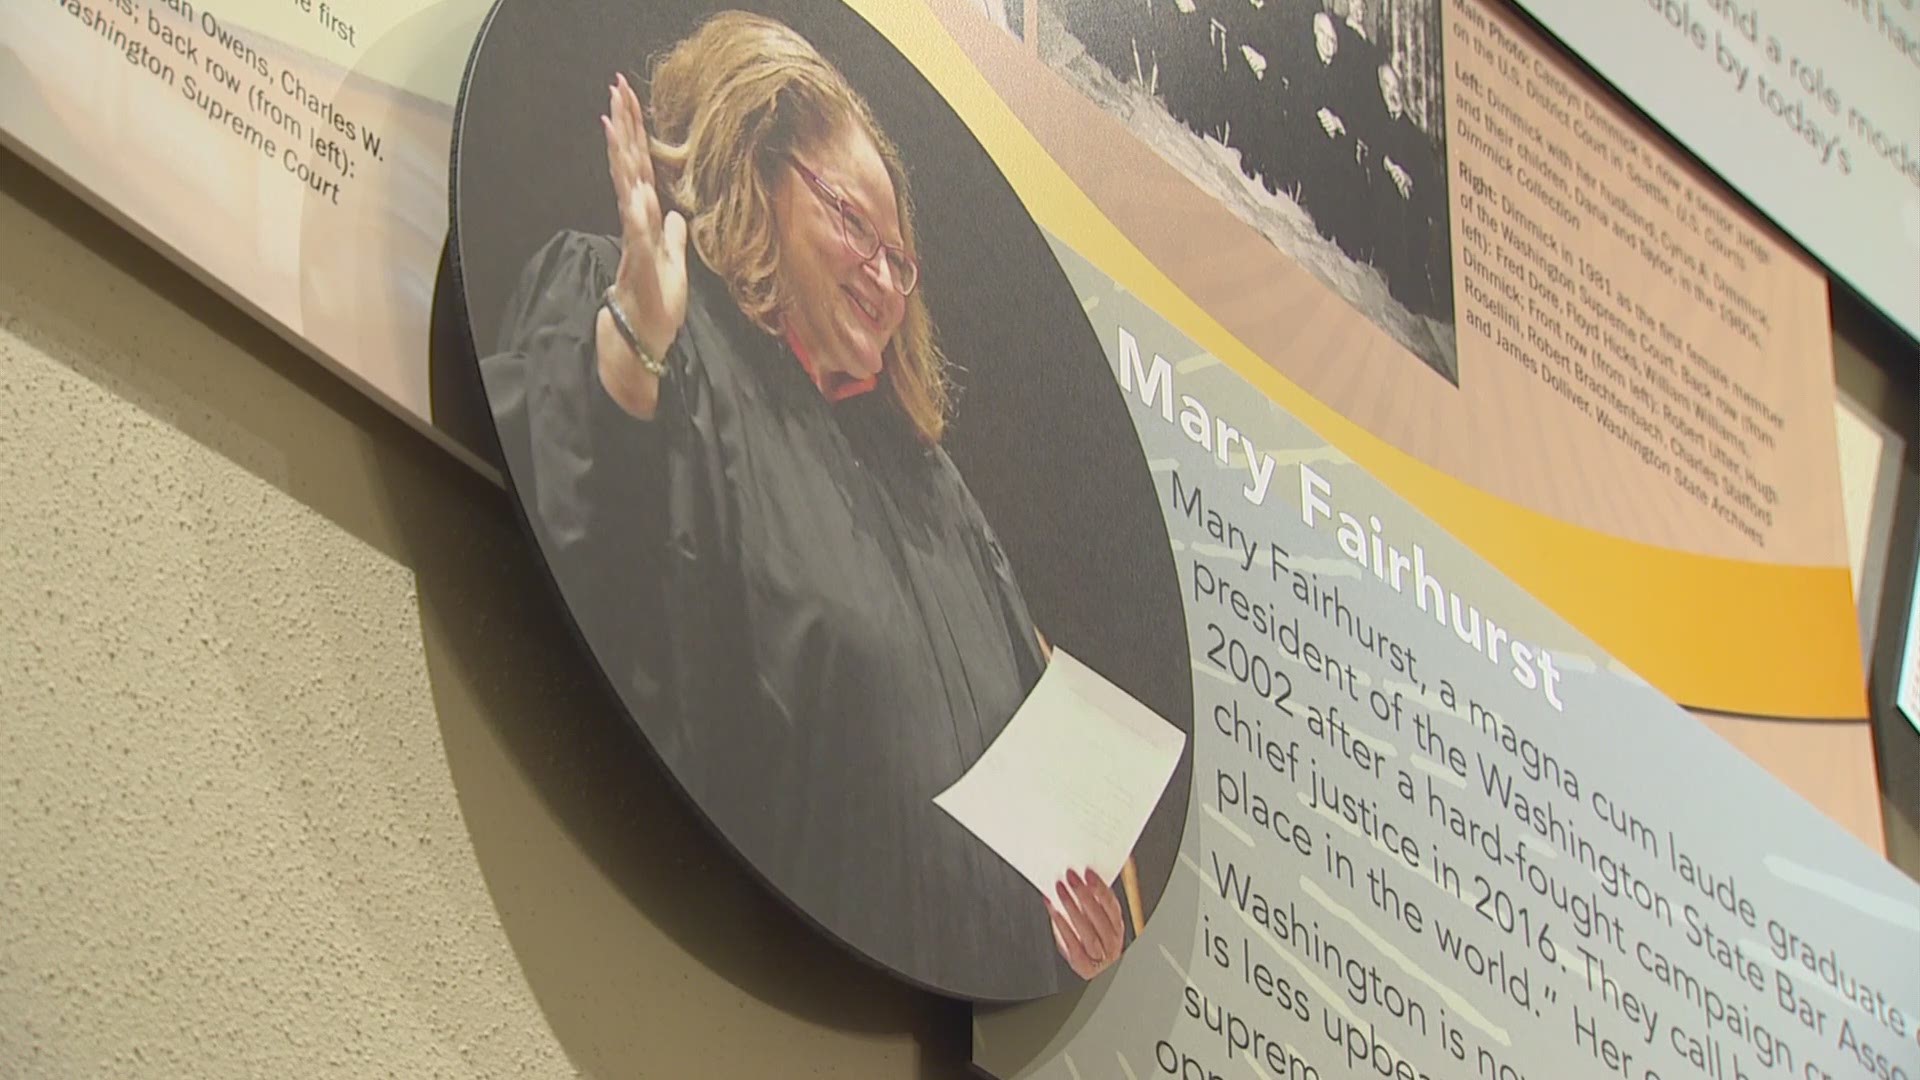 The exhibit celebrates women in Washington state who made history.